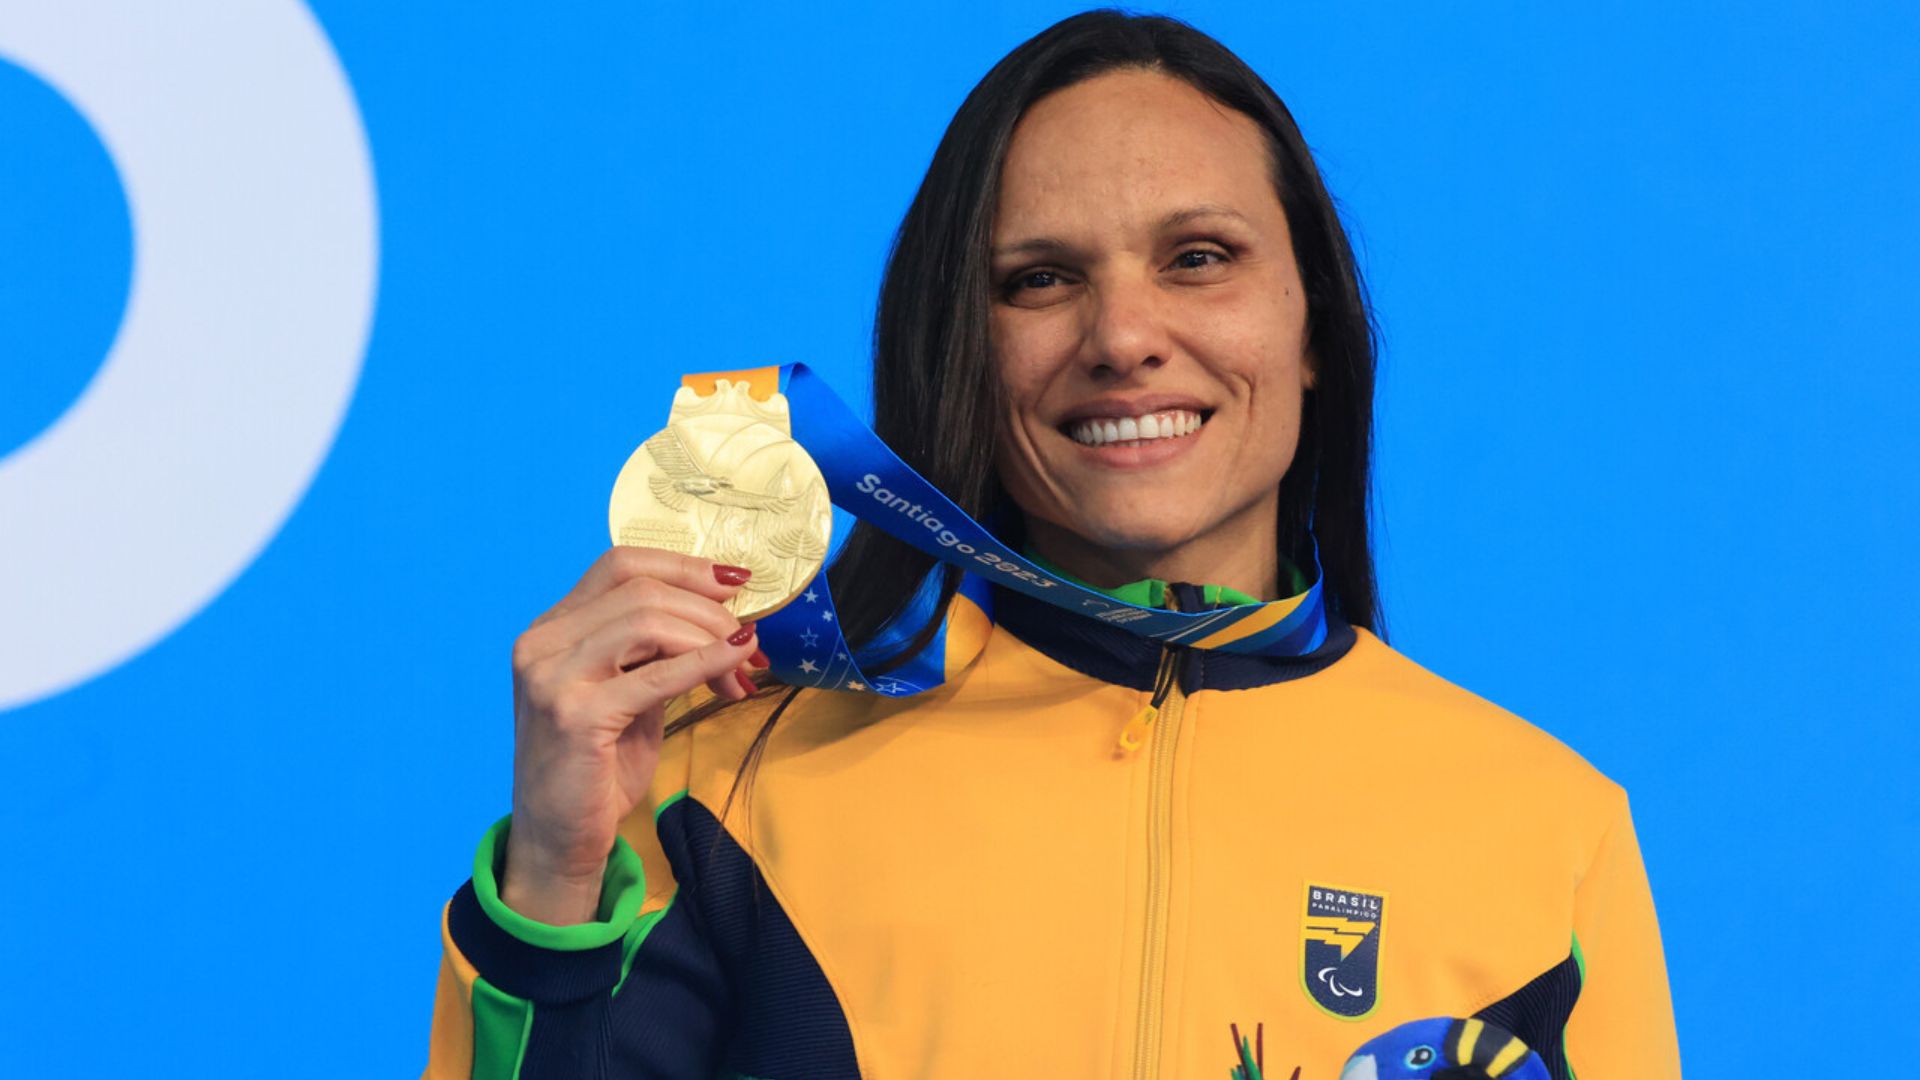 Santiago 2023’s Stars: Maria Carolina Gomes, the Queen of Para Swimming